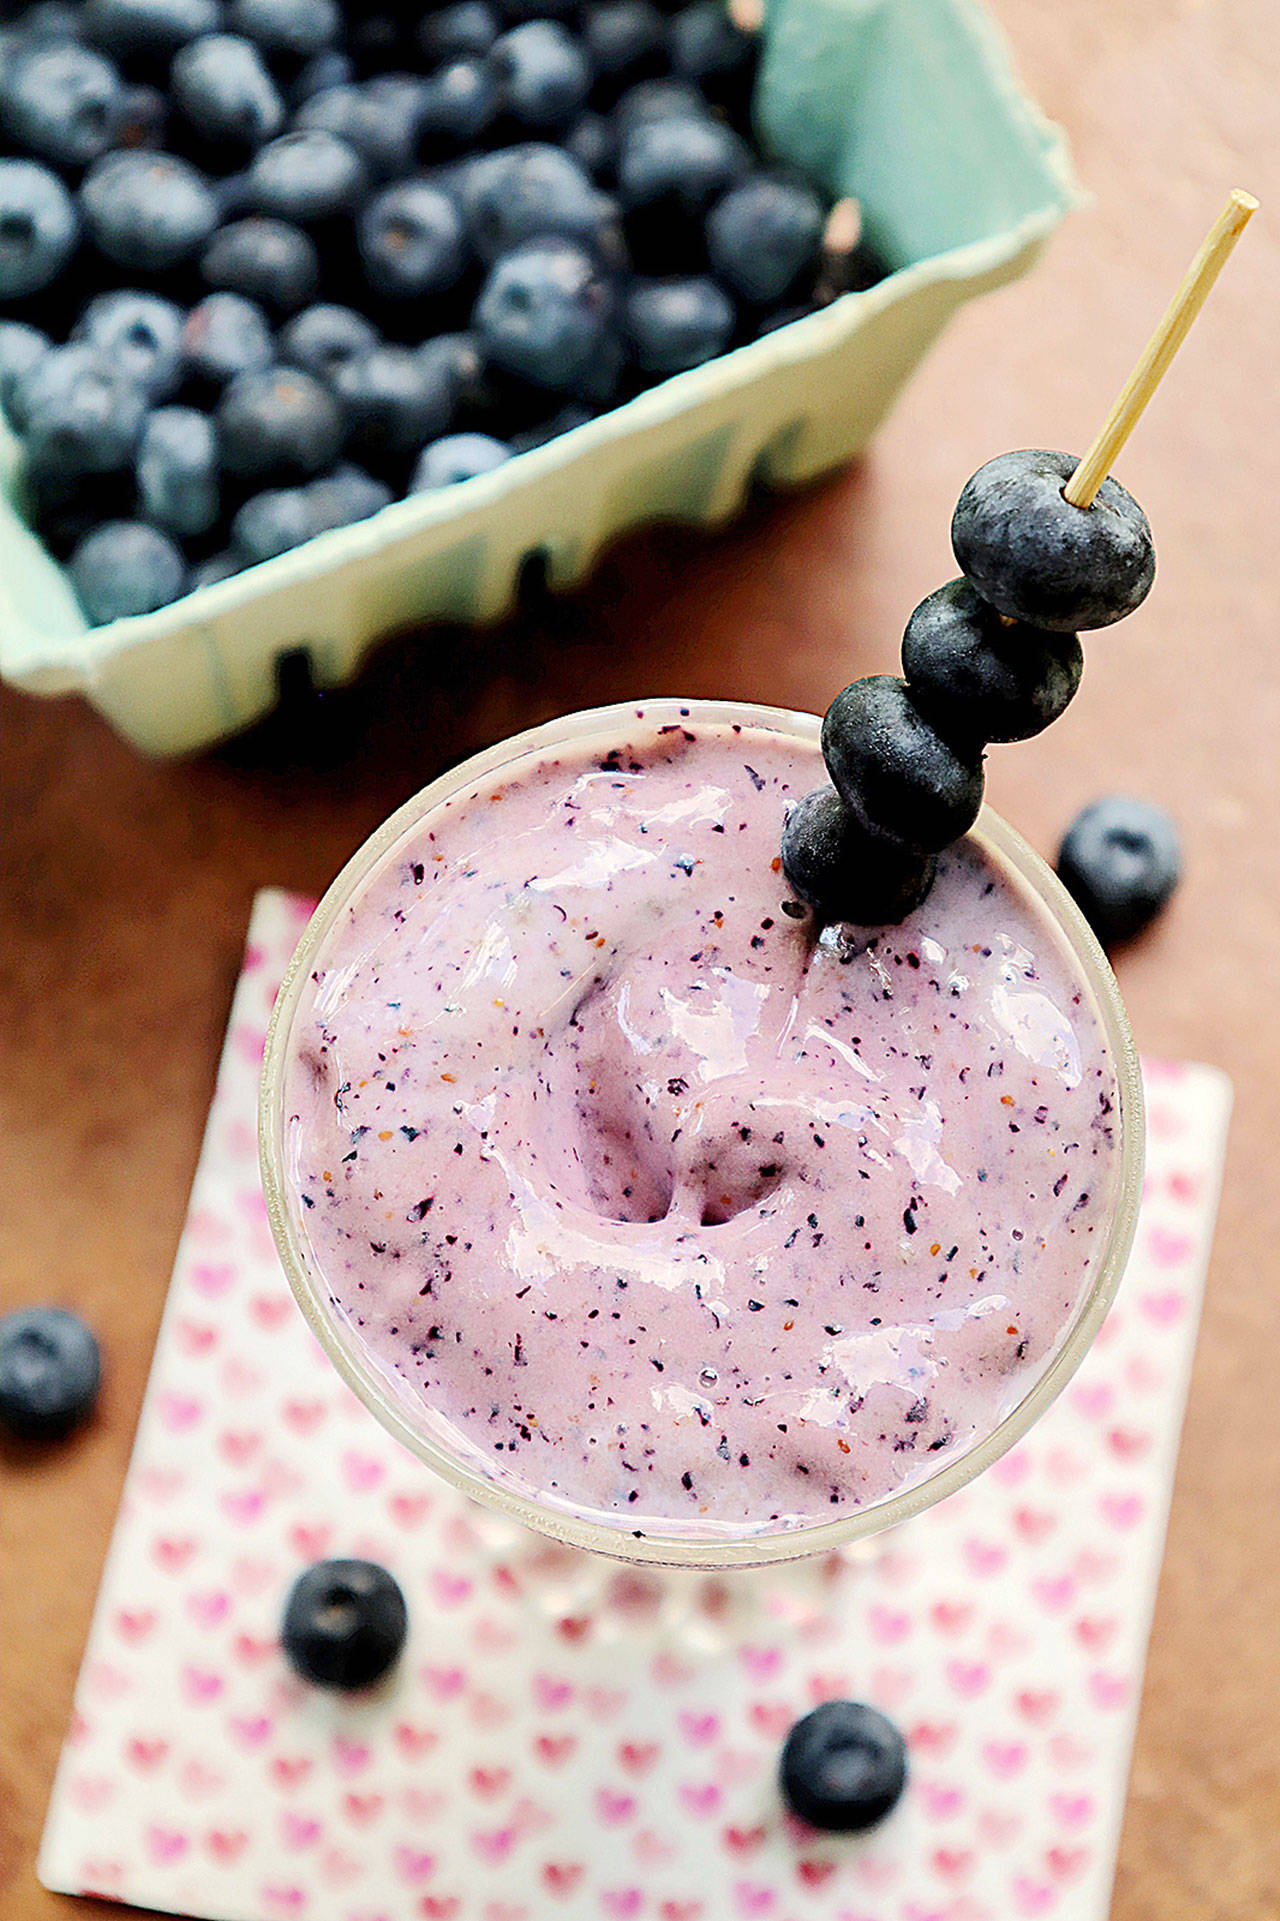 Frozen blueberries team up with banana and yogurt to make a refreshing summer smoothie. (Gretchen McKay / Pittsburgh Post-Gazette)